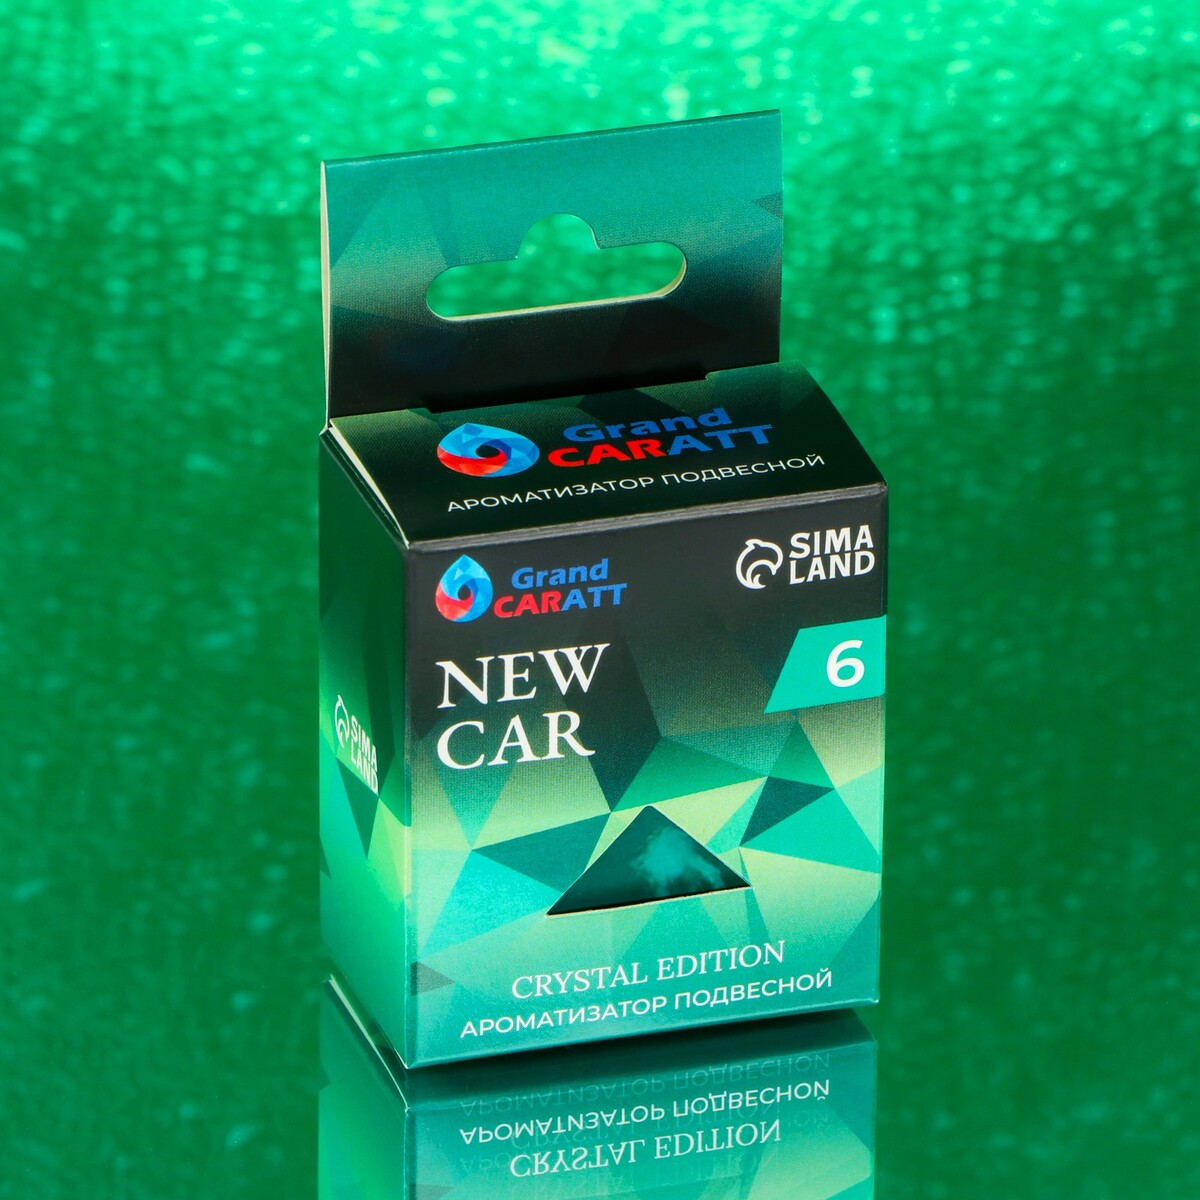   grand caratt crystal edition, new car, 7 